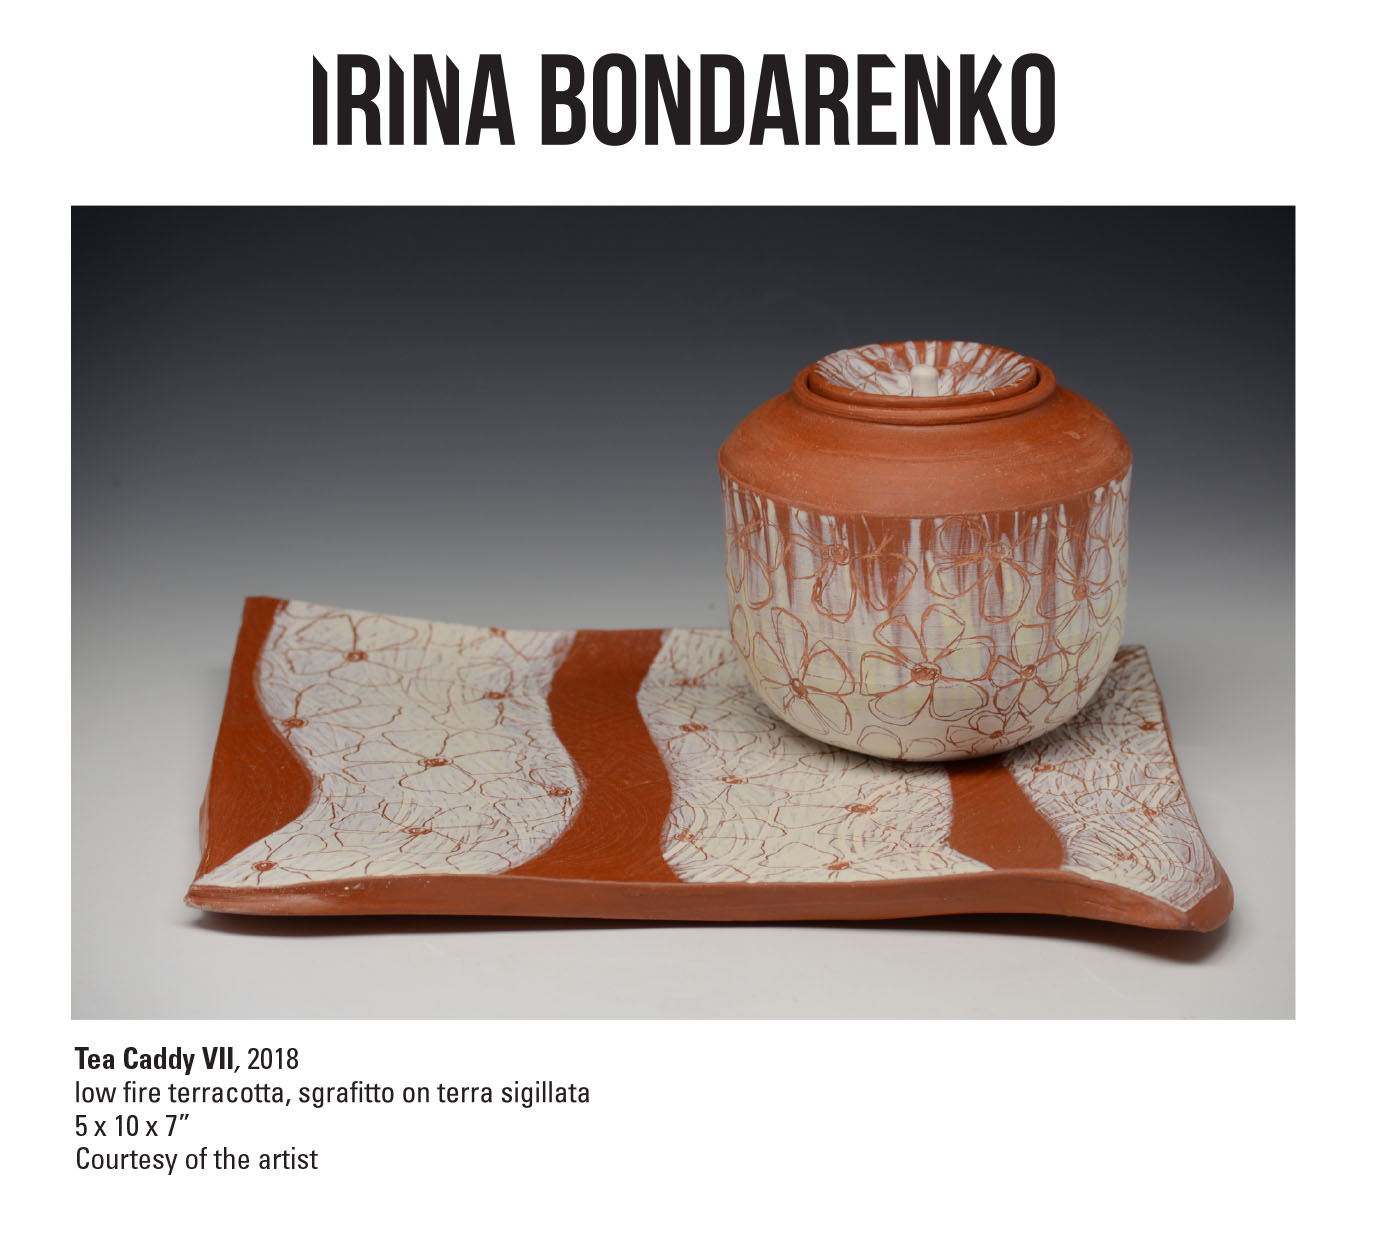 Irina Bondarenko, Tea Caddy VII, 2018. Low fire terracotta, sgrafitto on terra sigilata 5 x 10 x 7" Courtesy of the artist. A tea caddy with flowers drawn on the surface